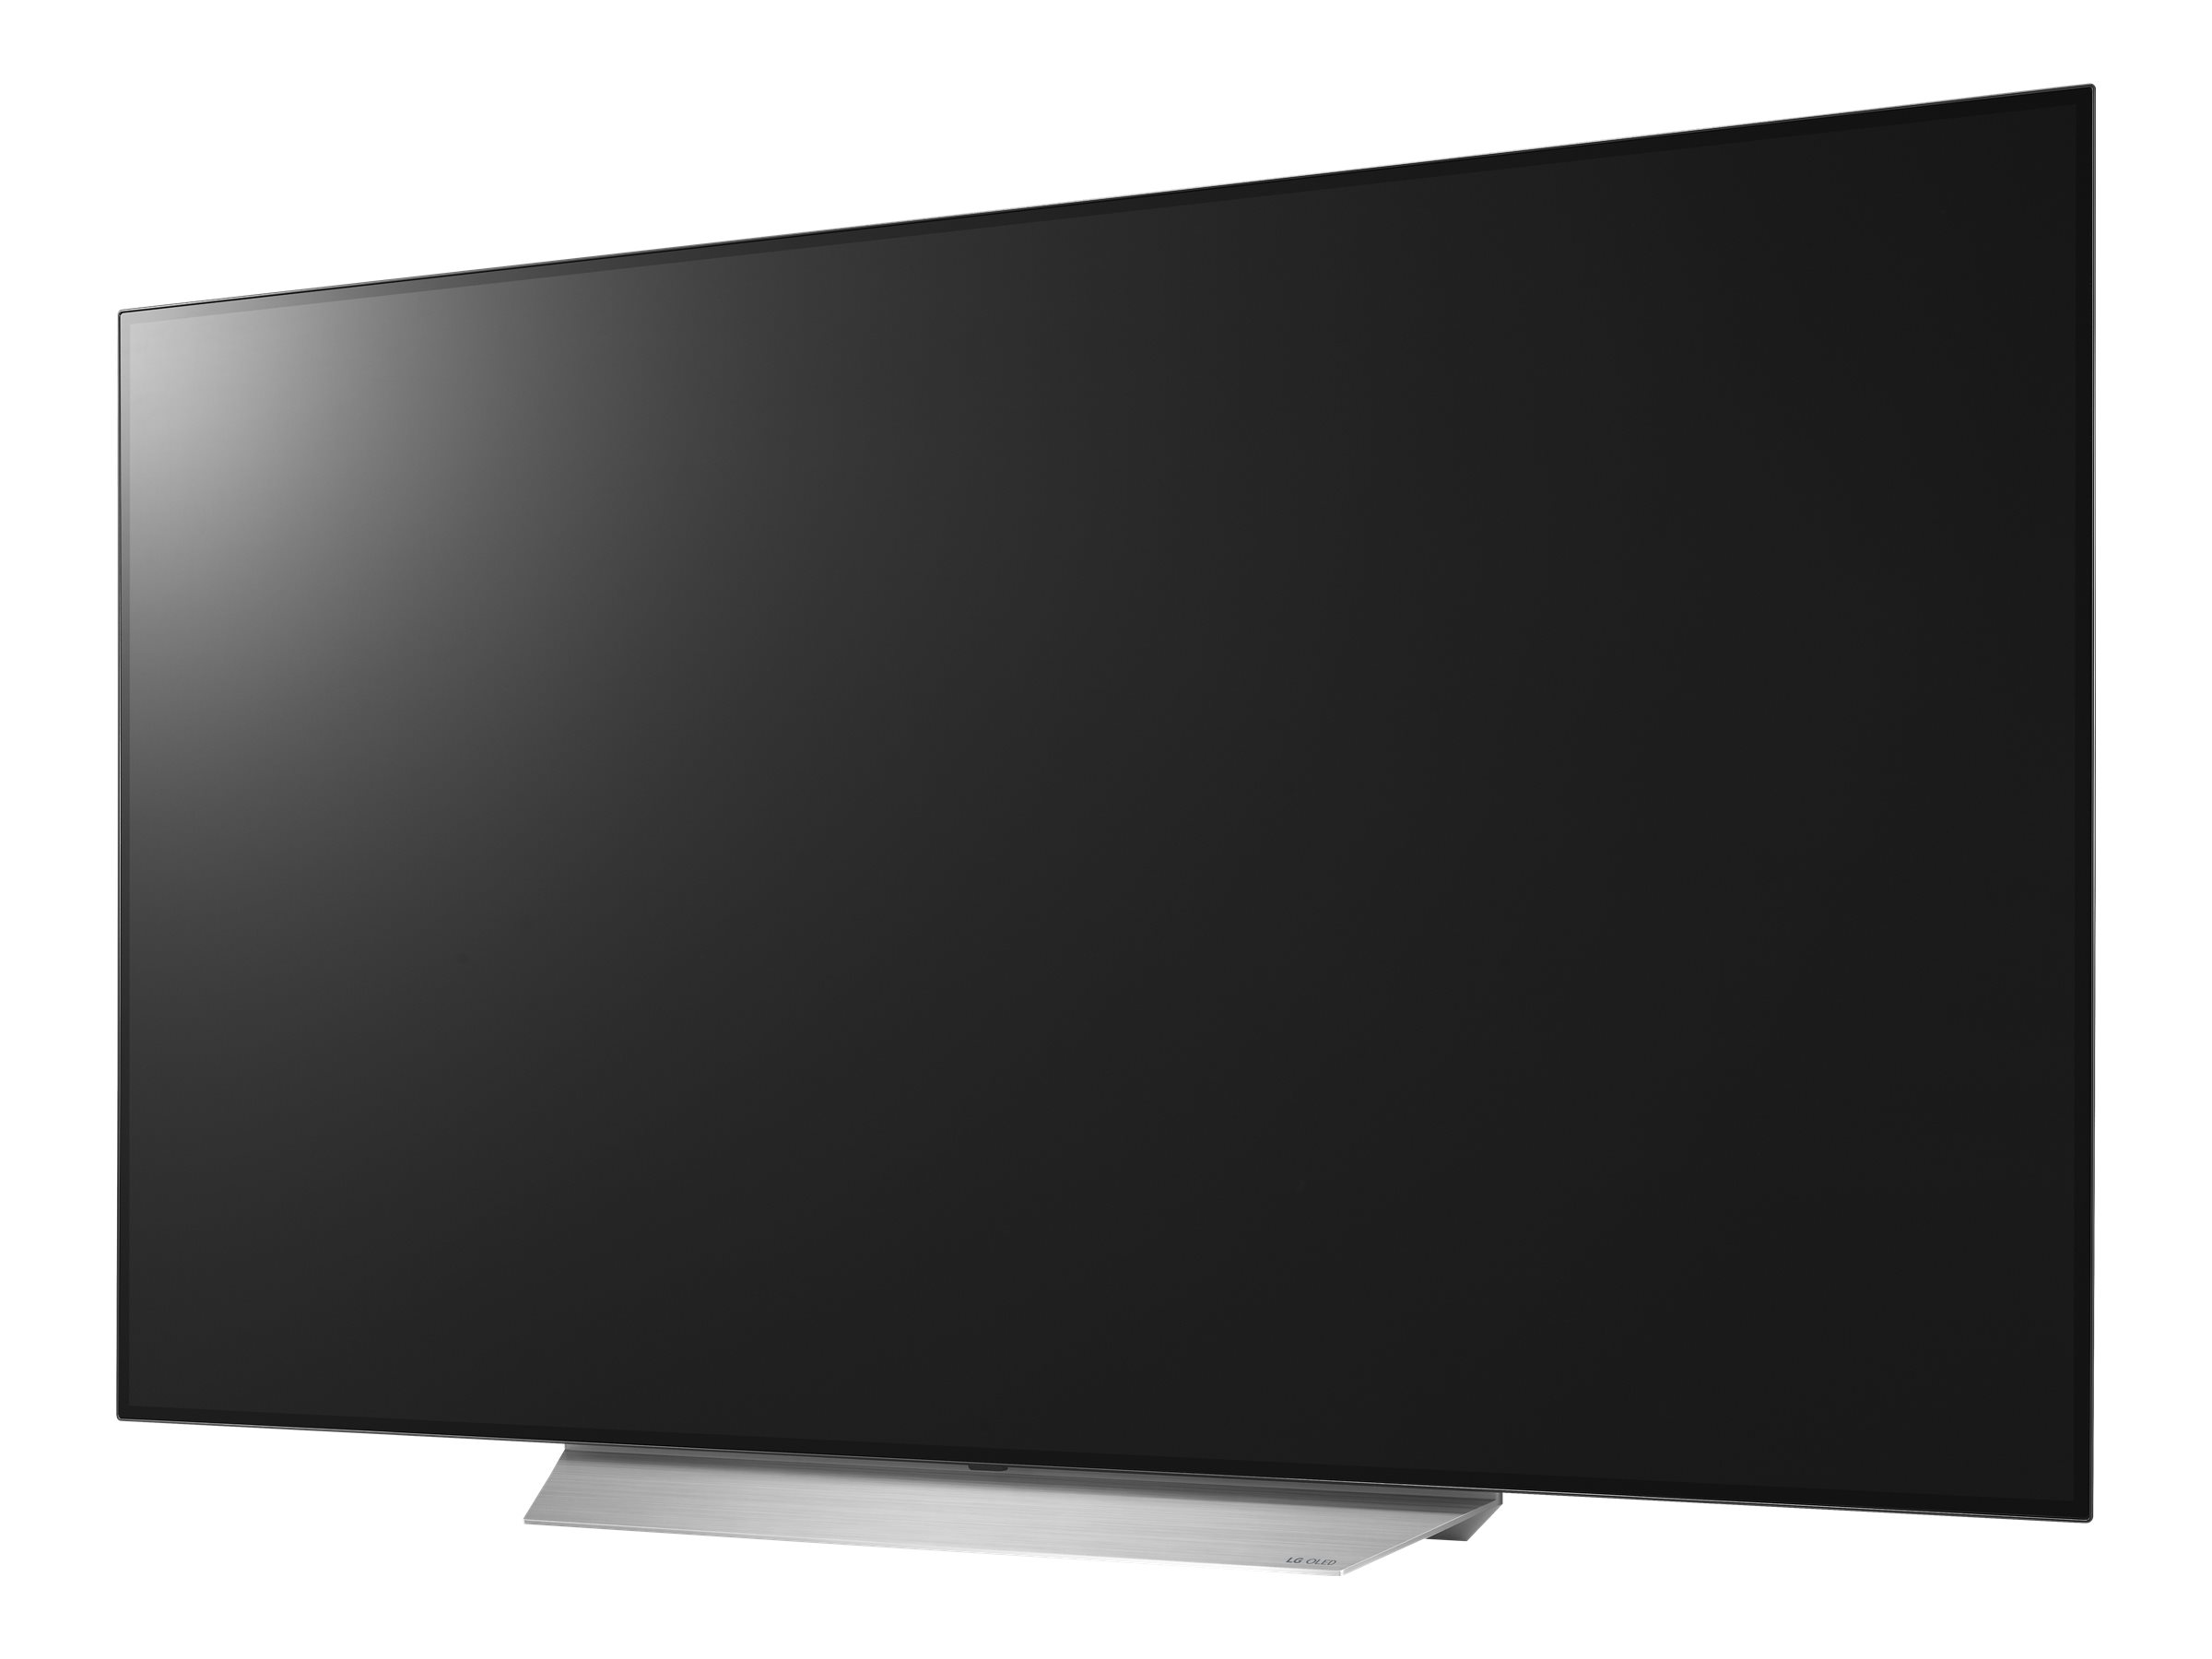 LG OLED55C7 - 55" Diagonal Class OLED TV - Smart TV - webOS - 4K UHD (2160p) 3840 x 2160 - HDR - image 1 of 9